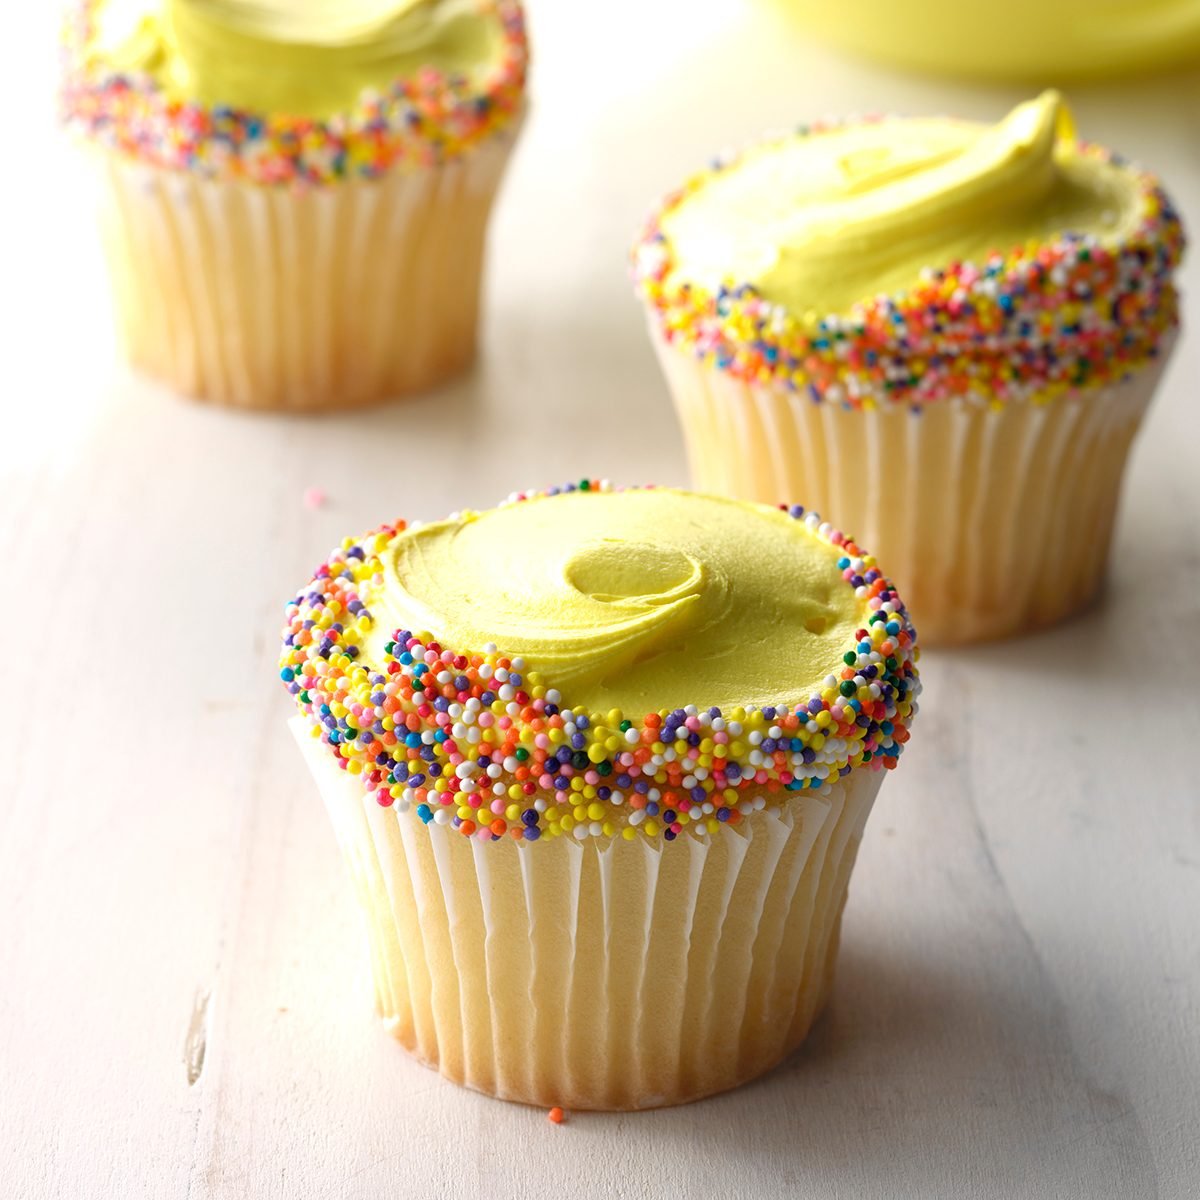 11 Easy Cupcake Decorating Ideas